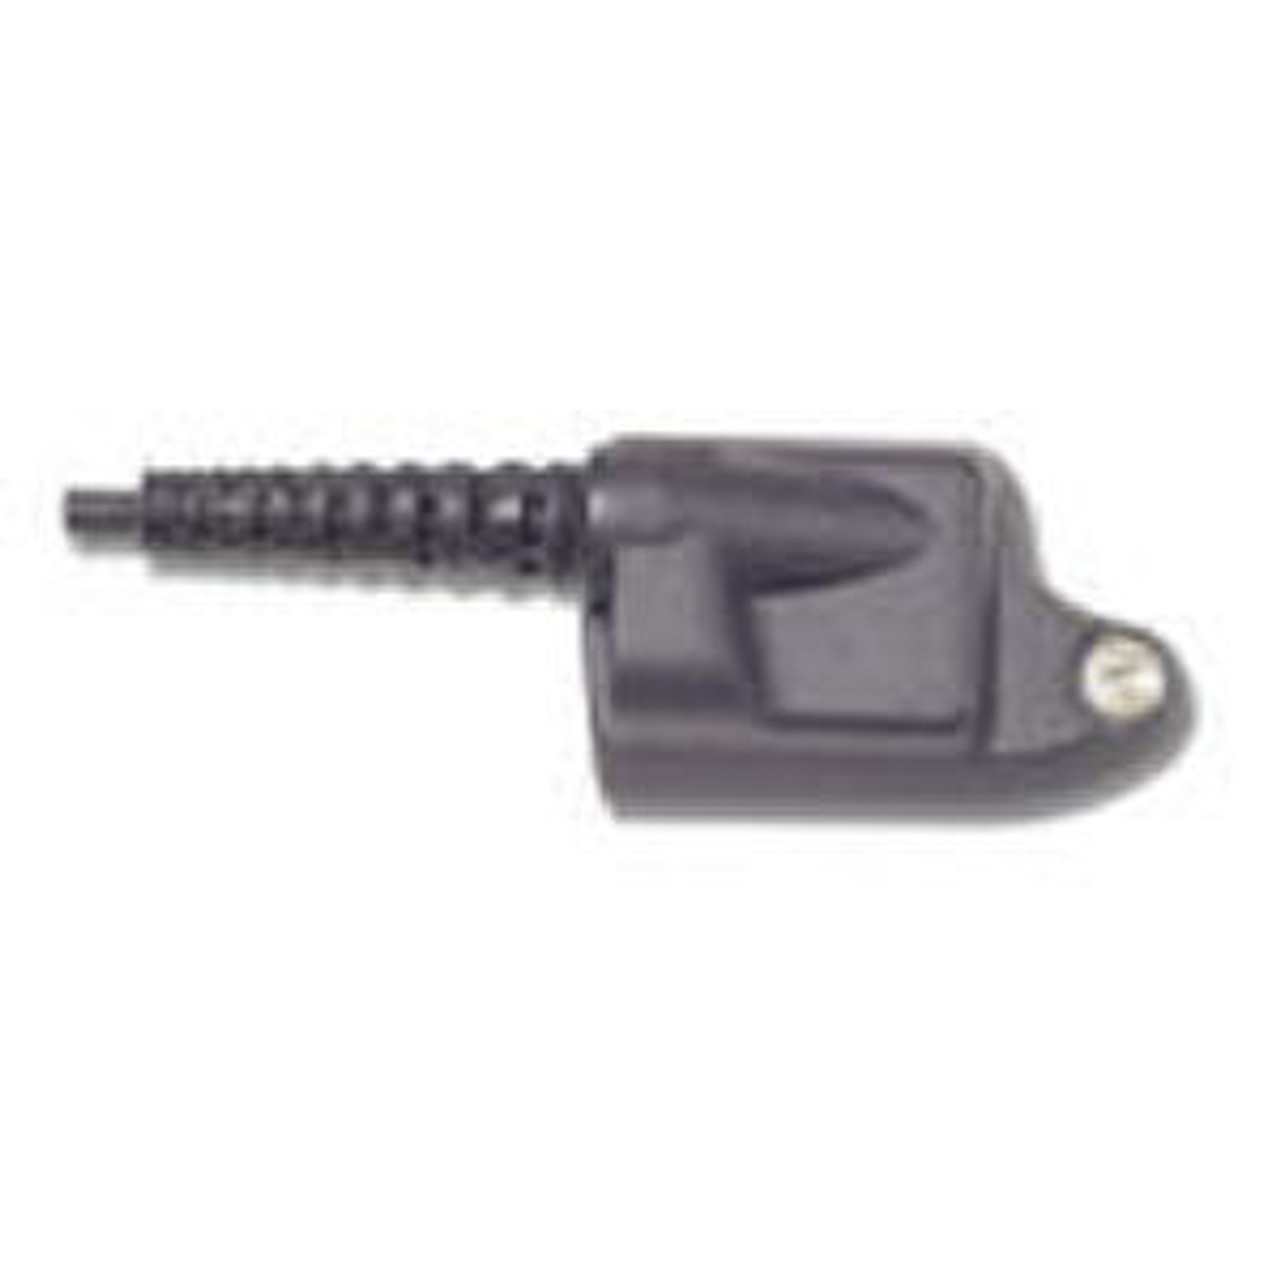 Harris P5170 3-Wire/3.5mm Female Surveillance Kit